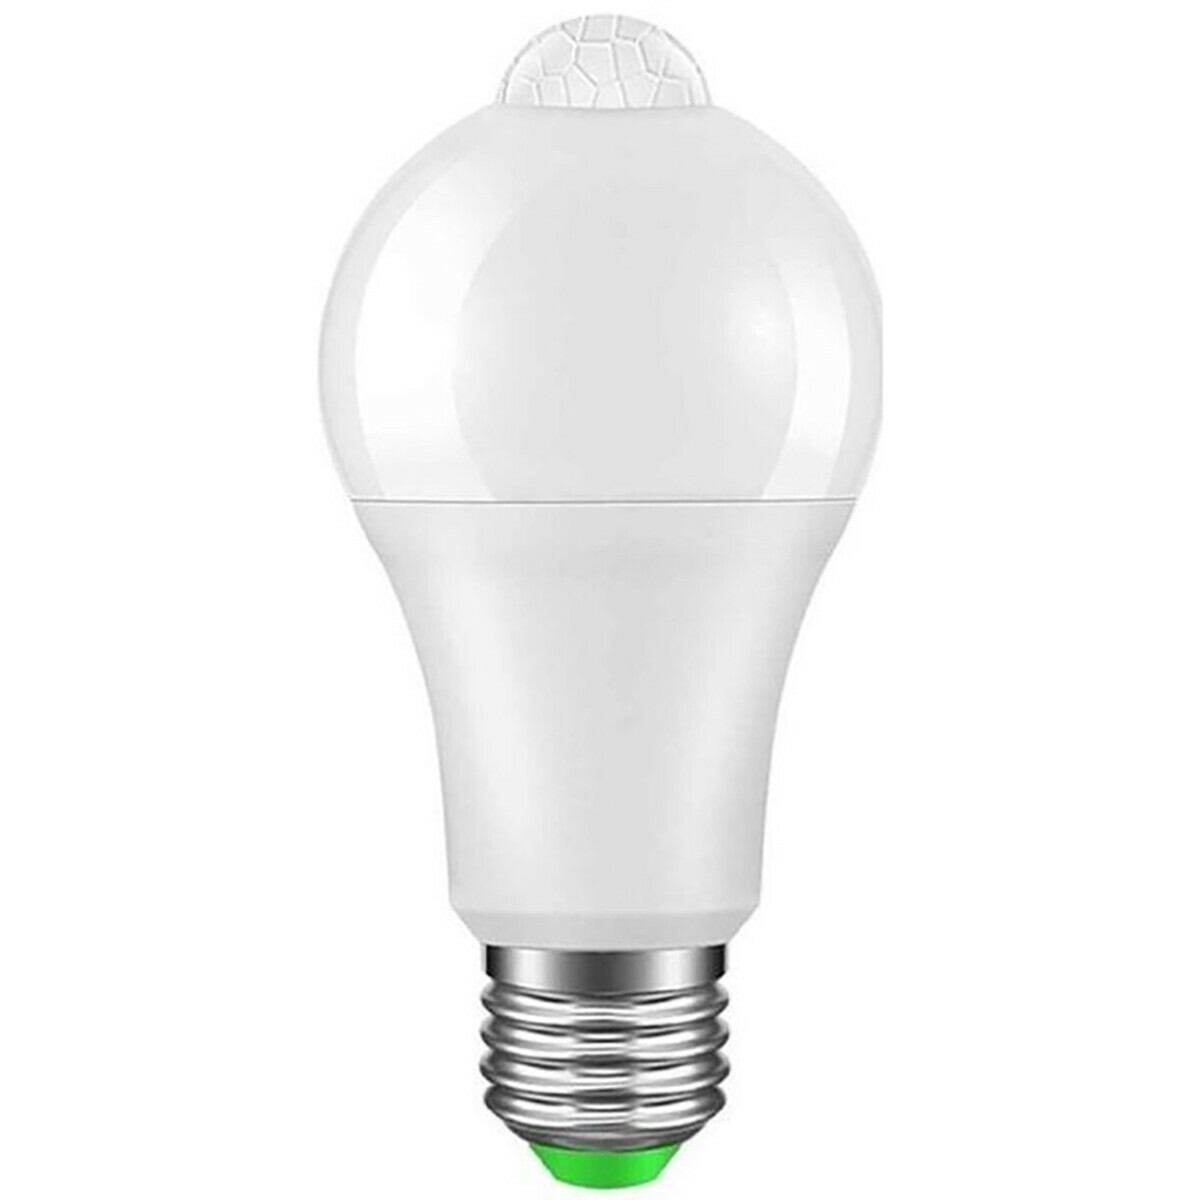 credit Infrarood Leerling LED Lamp met Bewegingssensor - Aigi Linido - A60 - E27 Fitting - 6W -  Helder/Koud Wit 6500K | BES LED